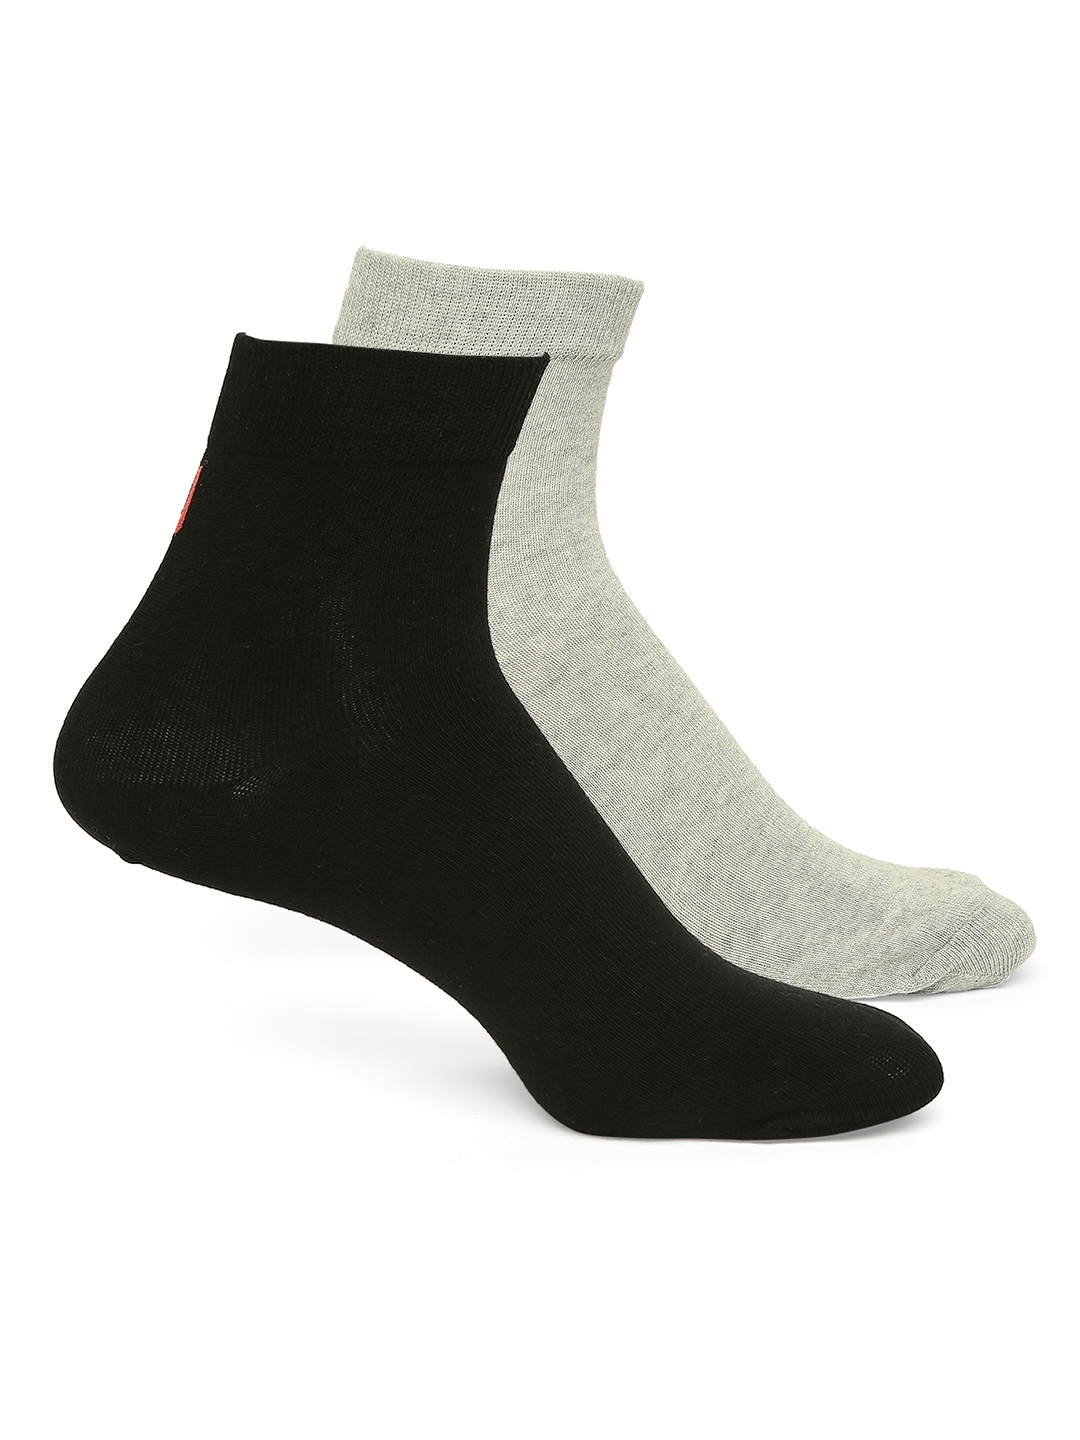 spykar | Underjeans by Spykar Premium Grey Melange & Black Ankle Length Socks - Pack Of 2